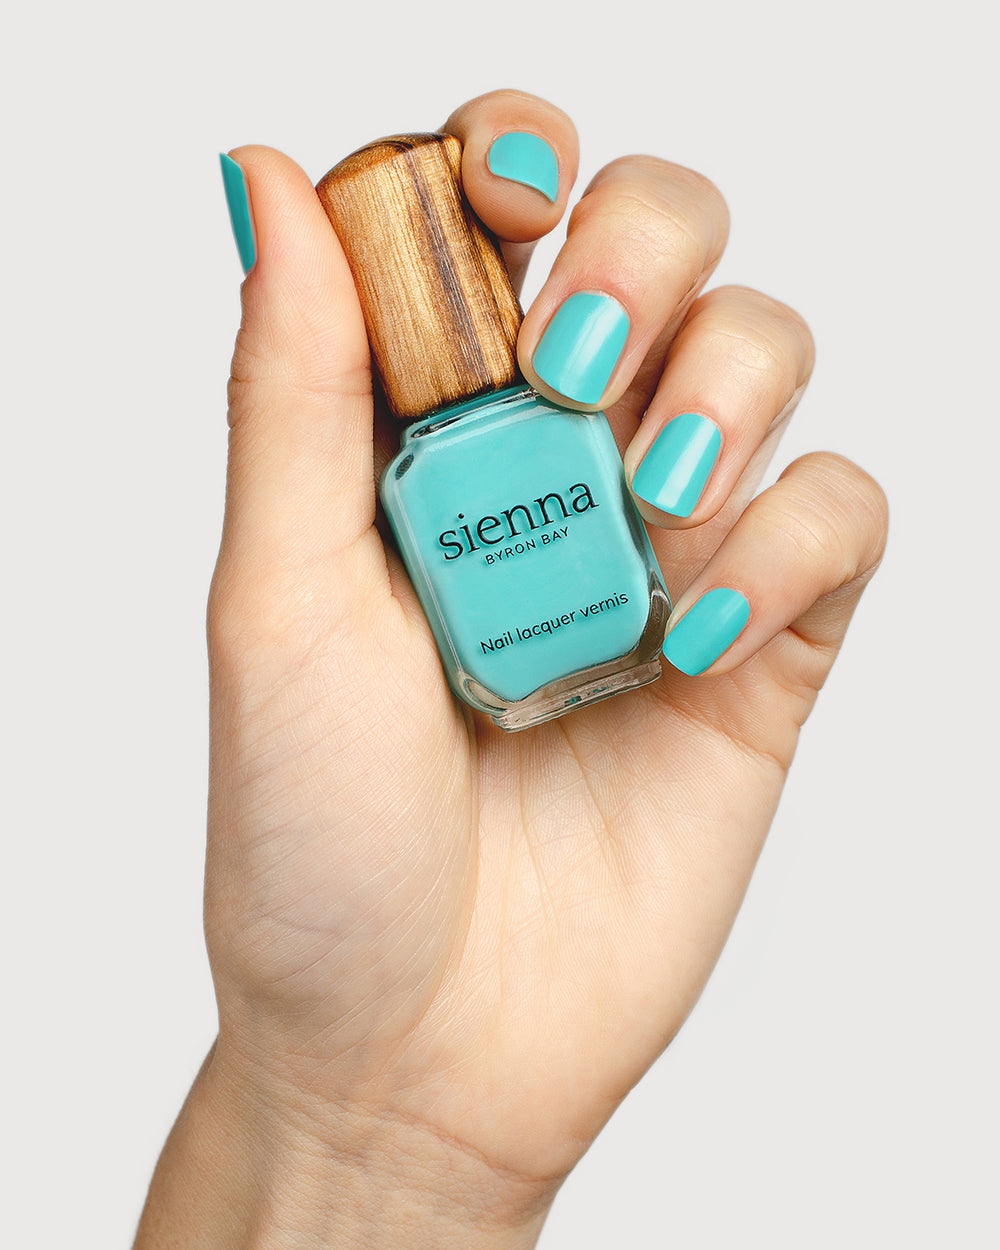 turquoise aqua nail polish hand swatch on fair skin tone holding a sienna bottle